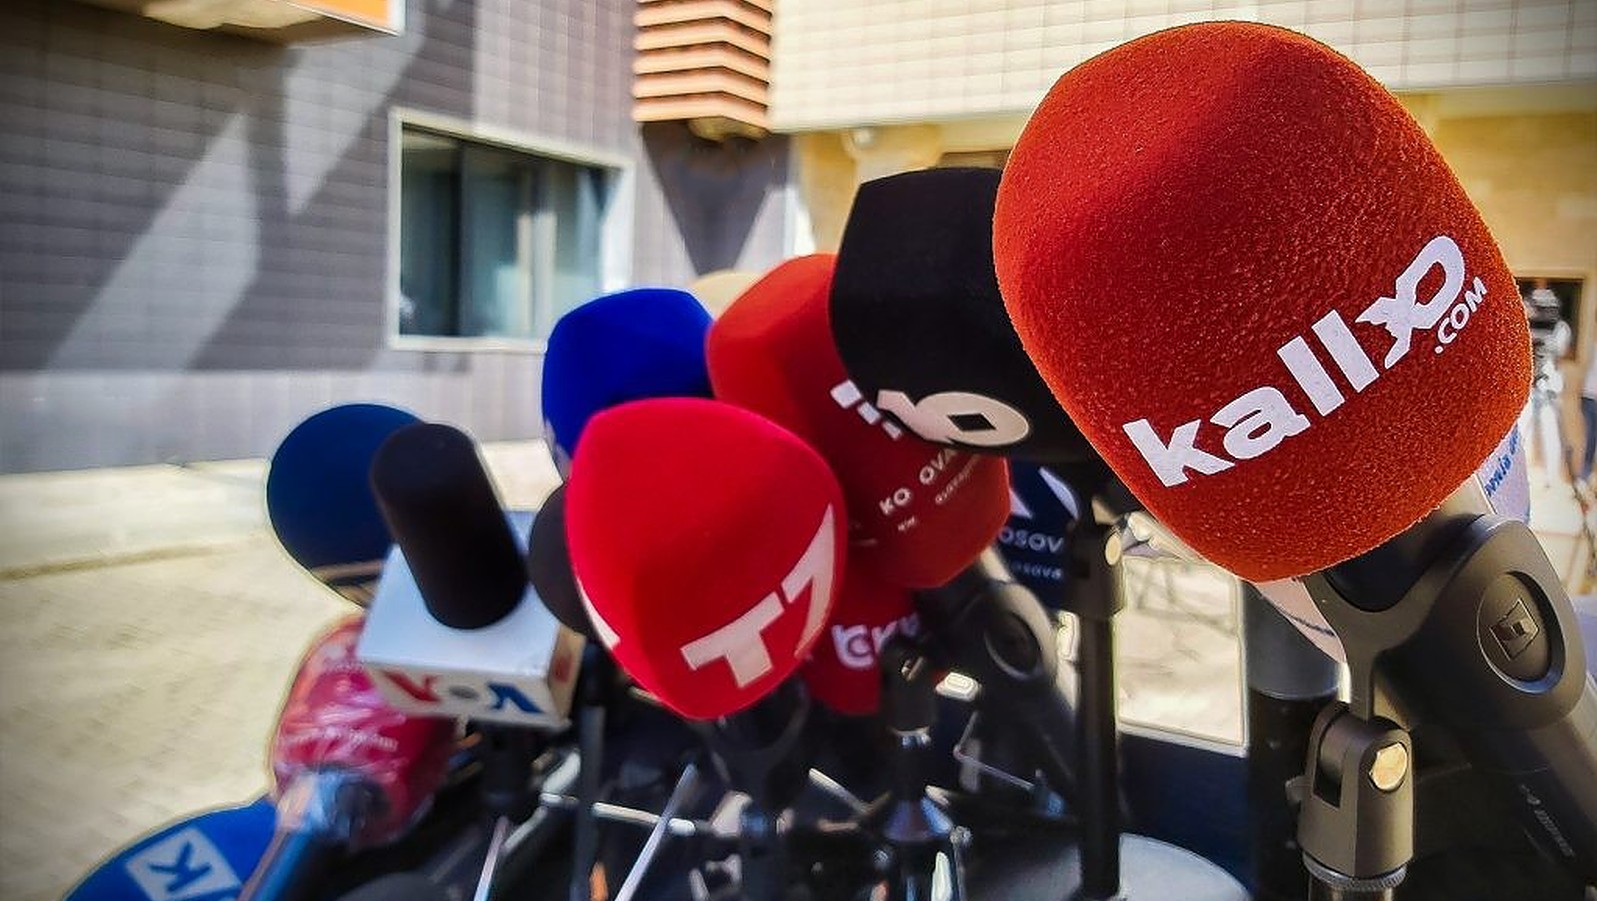 Attack on Kosovo Journalist Condemned